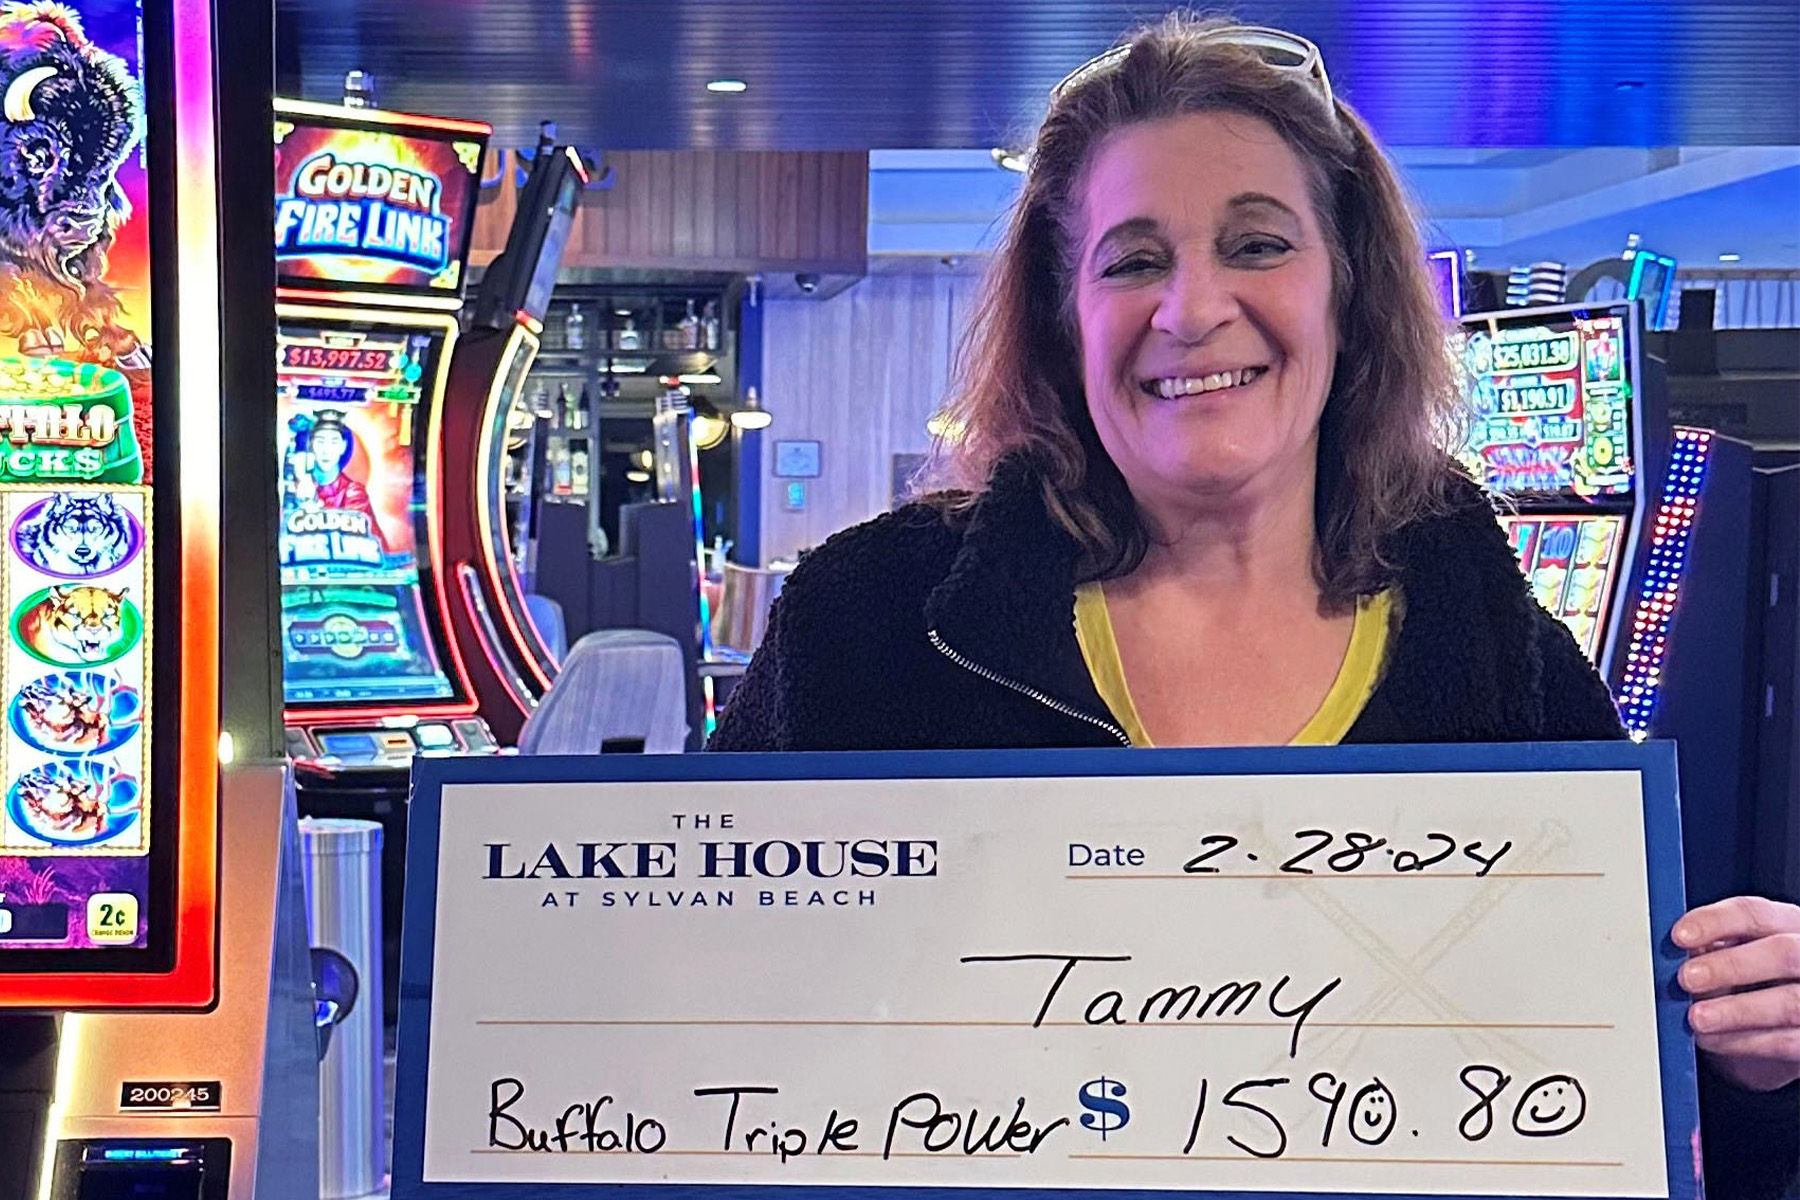 Tammy won $1,590